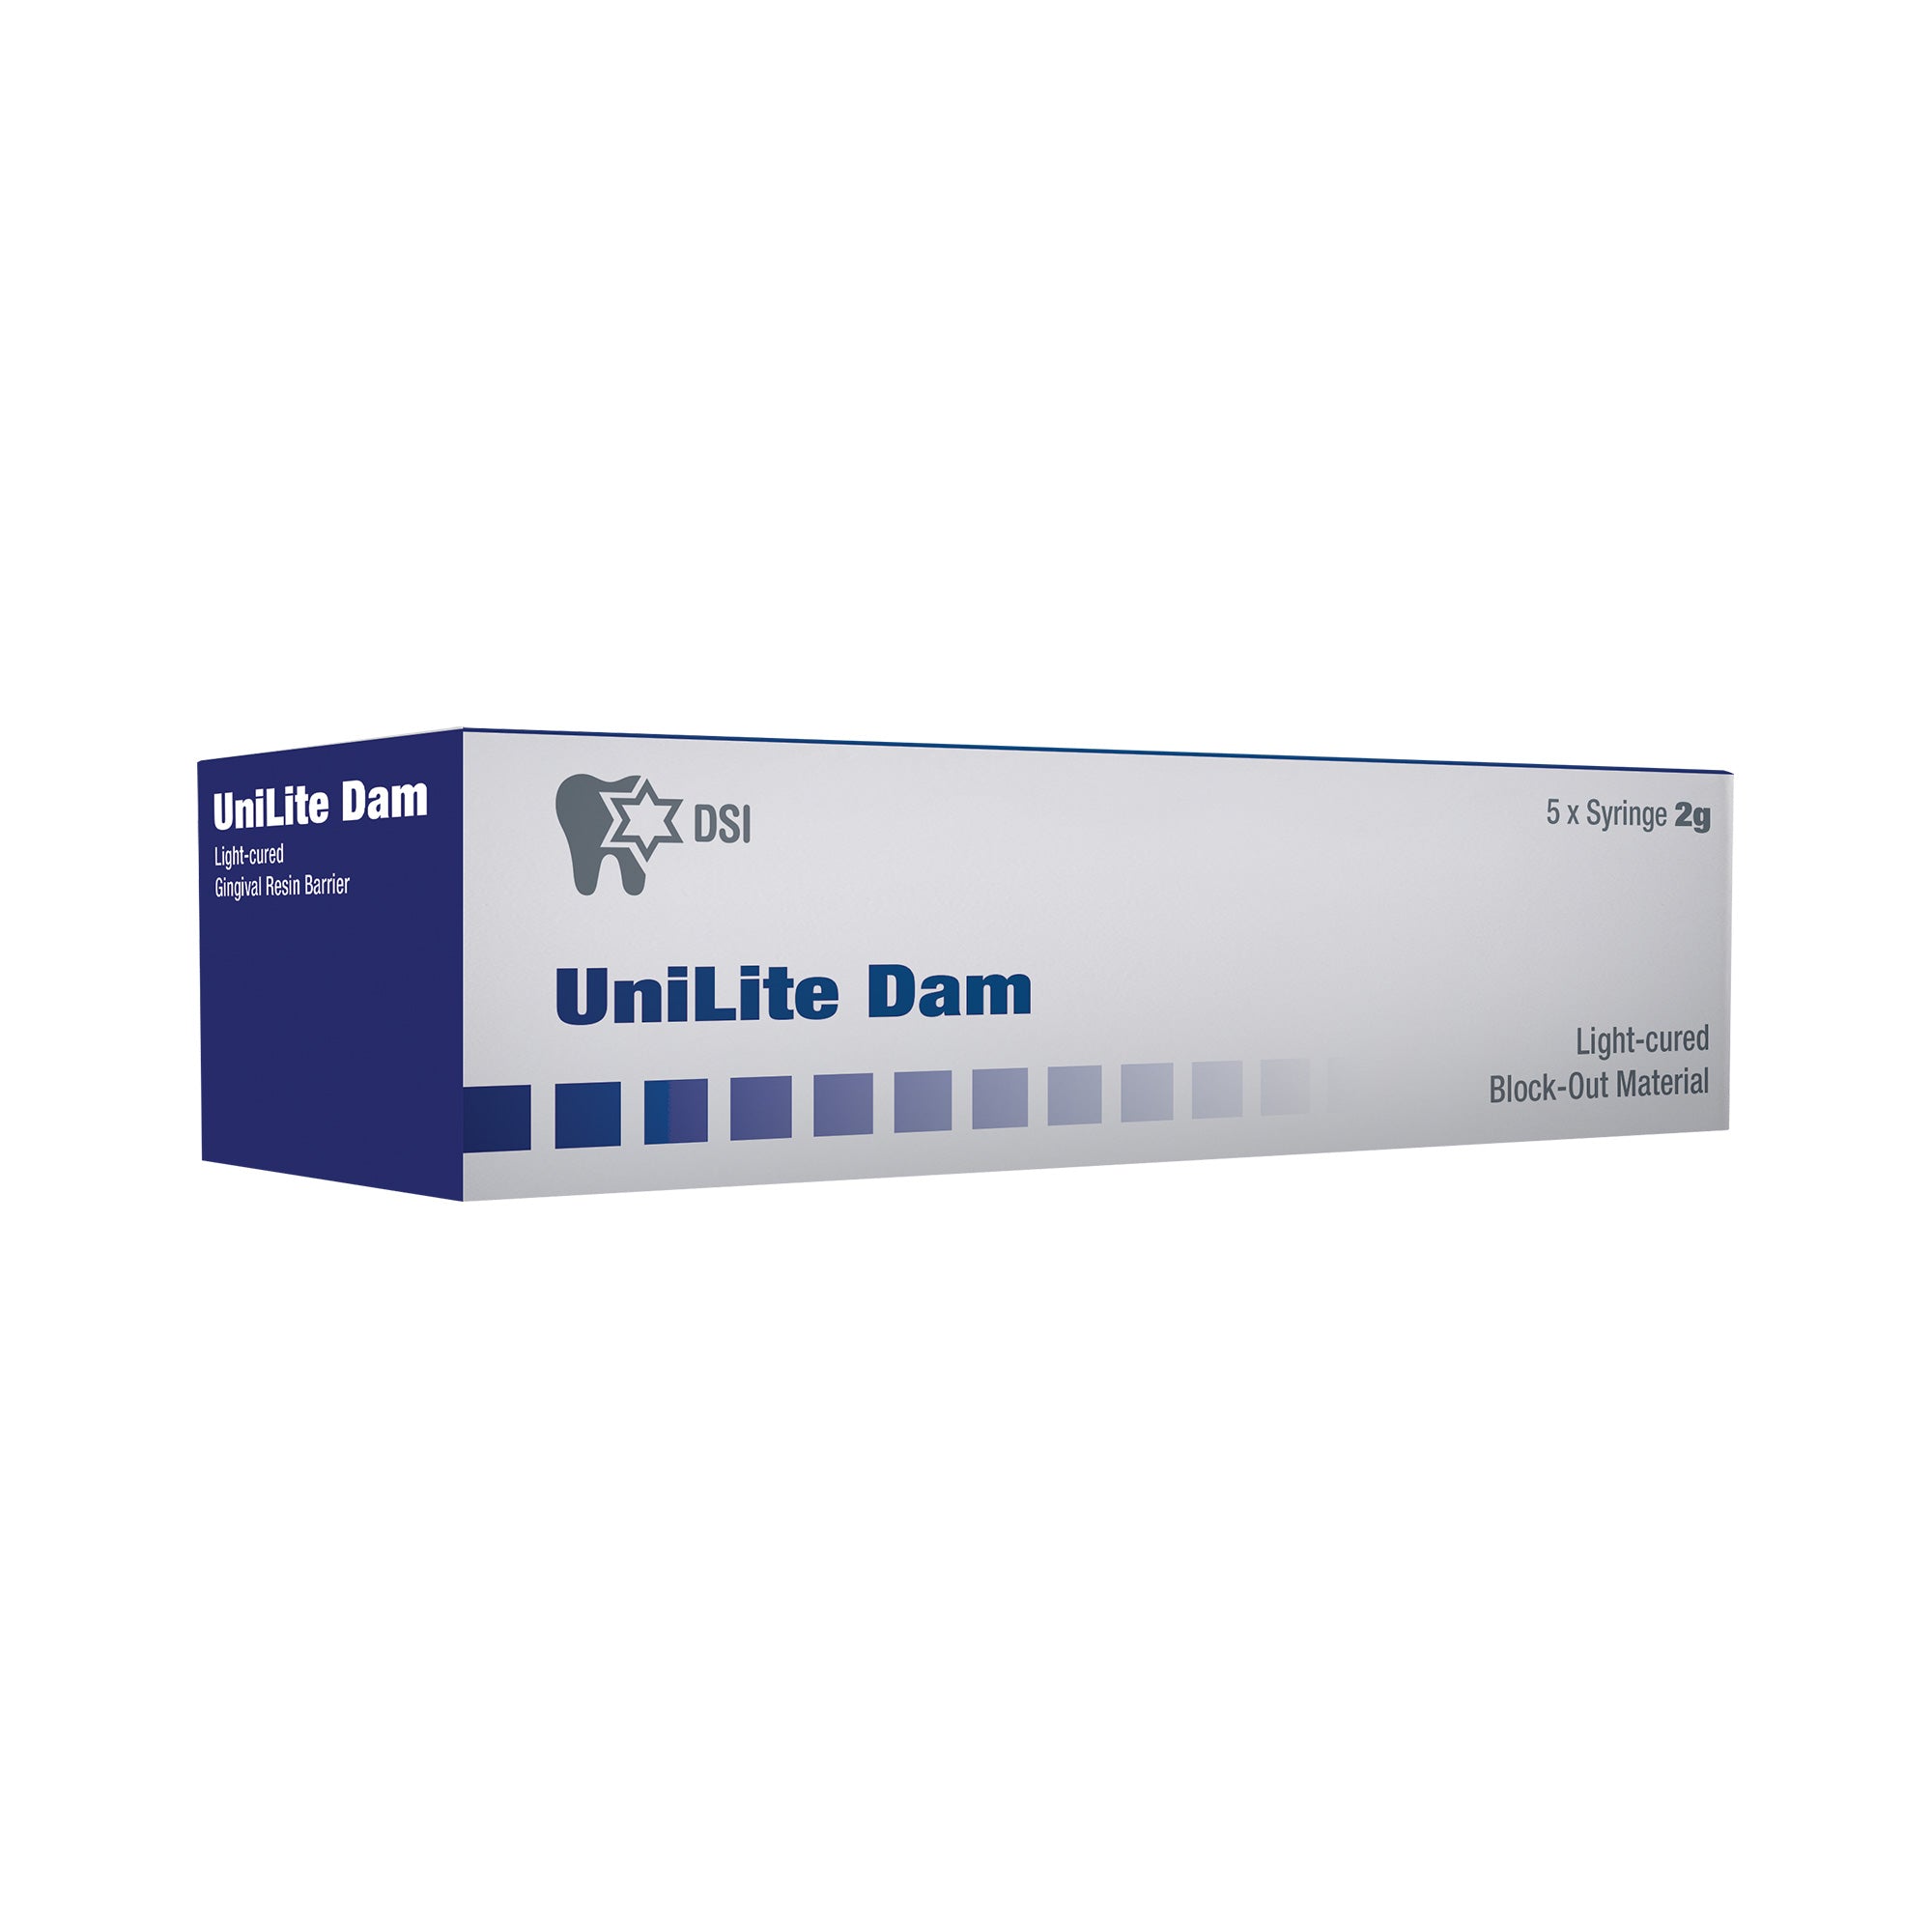 DSI UniLite Dam Light Curing Gingival Barrier 5x2g syringes